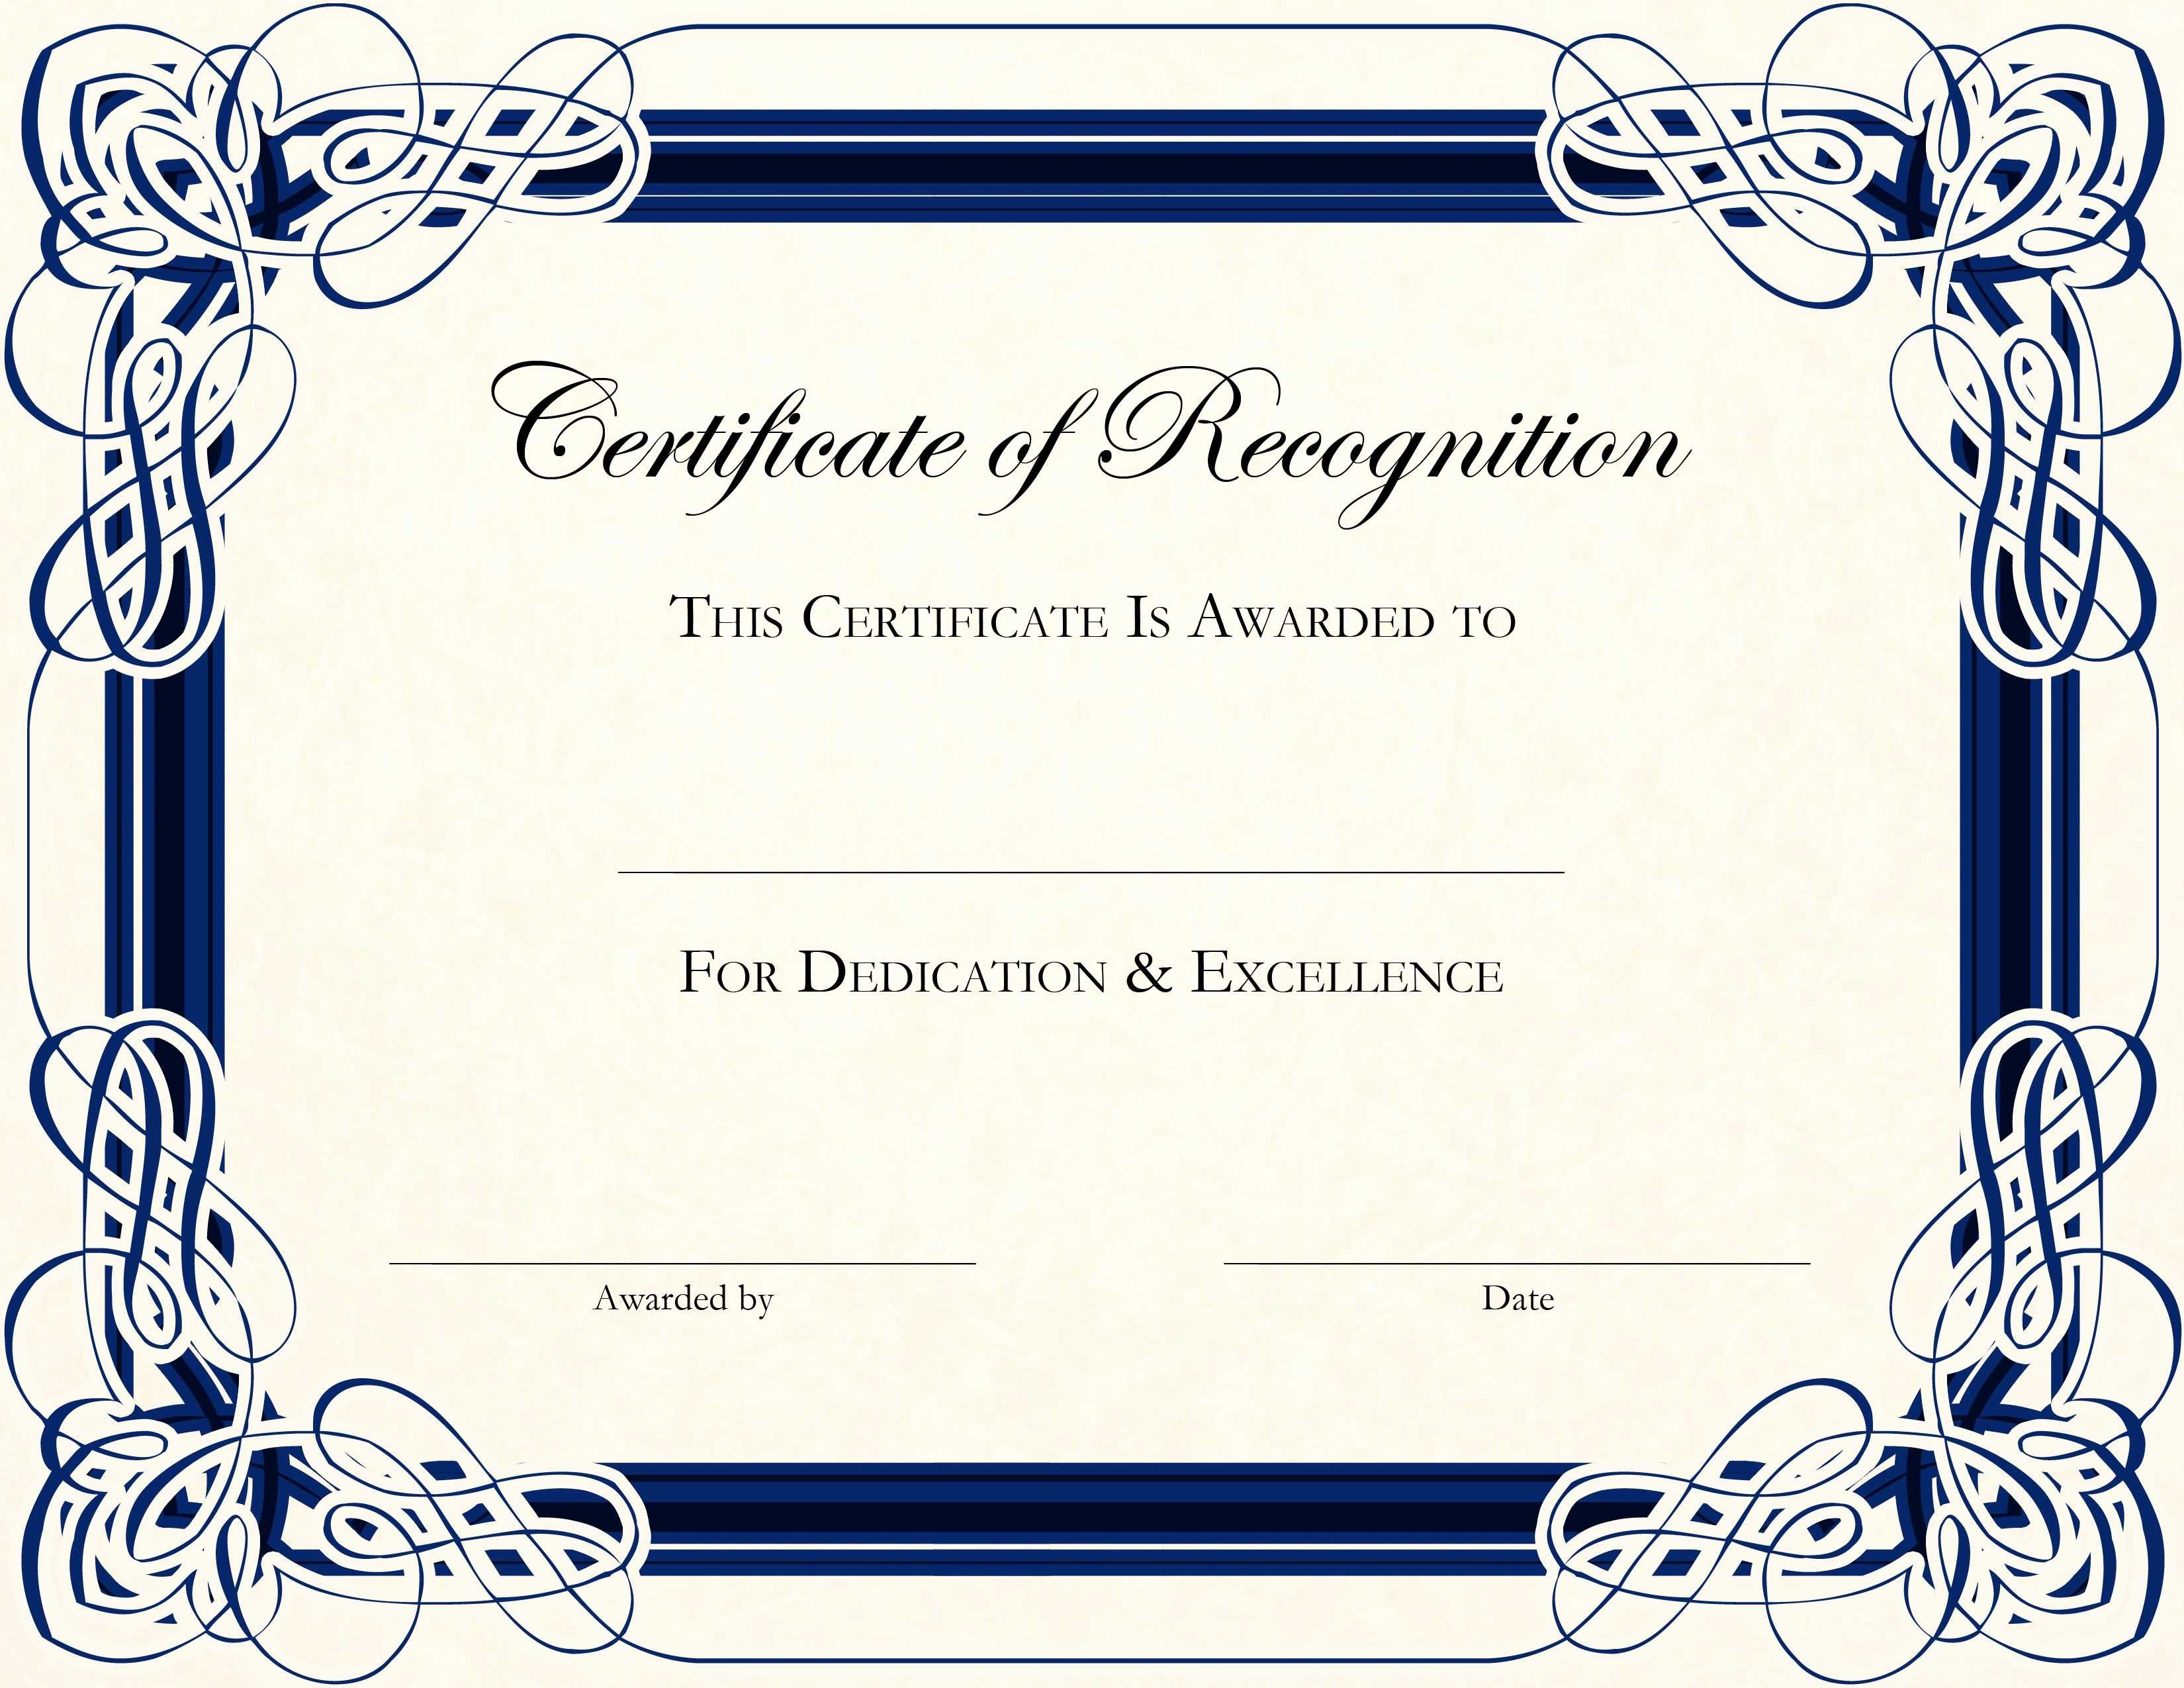 30 Award Certificate Template Free | Tate Publishing News In Free Funny Award Certificate Templates For Word